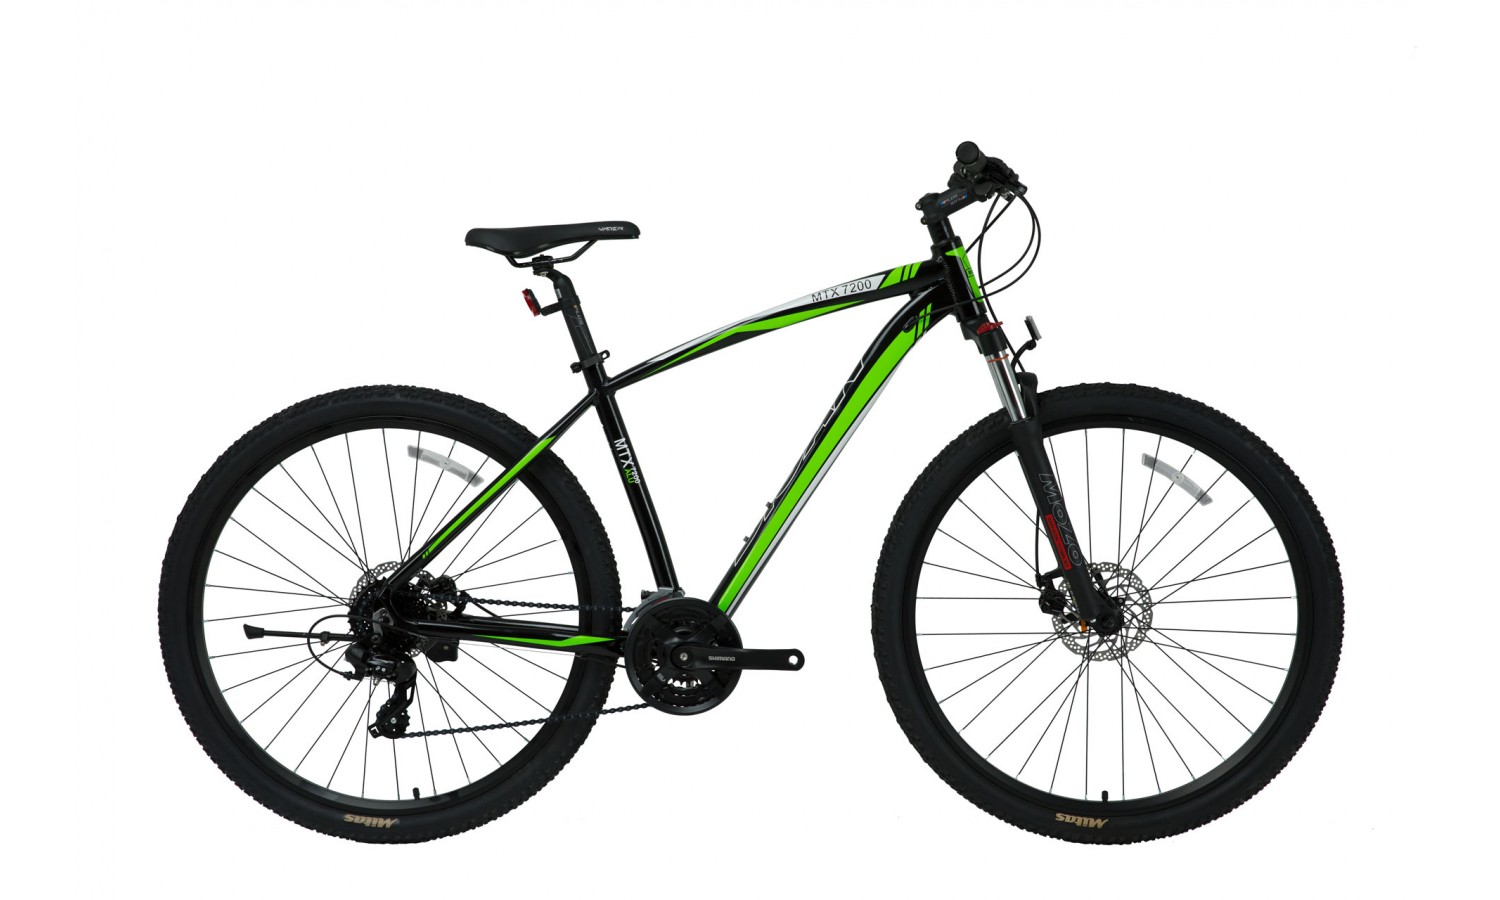 Bisan Mtx 7200 27.5 Md Dağ Bisikleti (Siyah Yeşil)